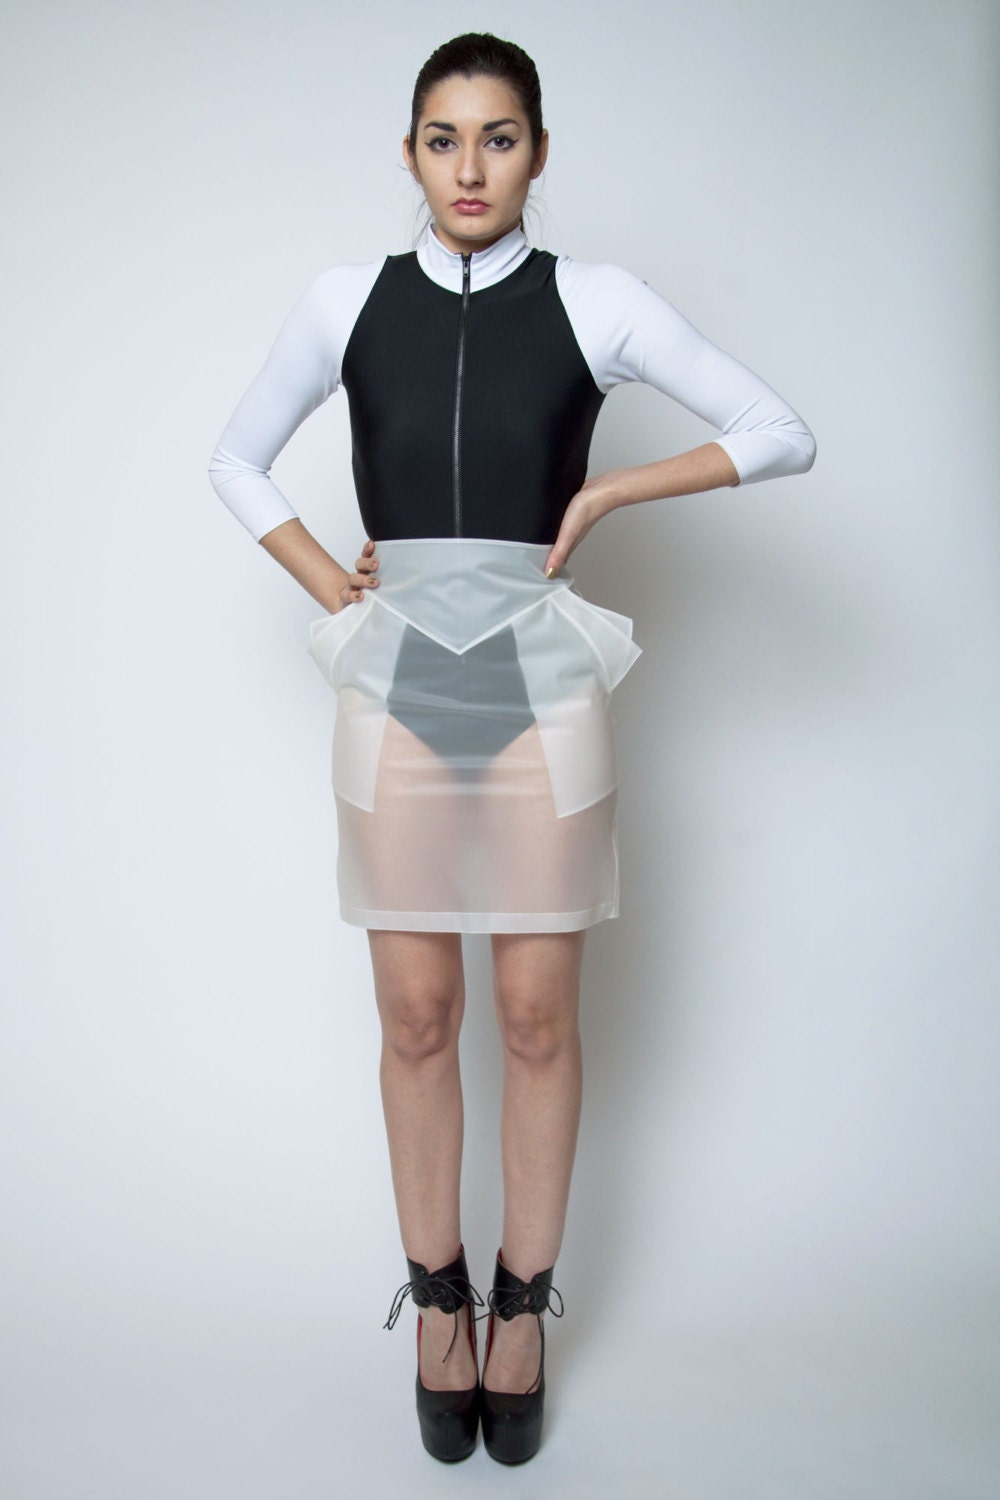 Clear latex skirt